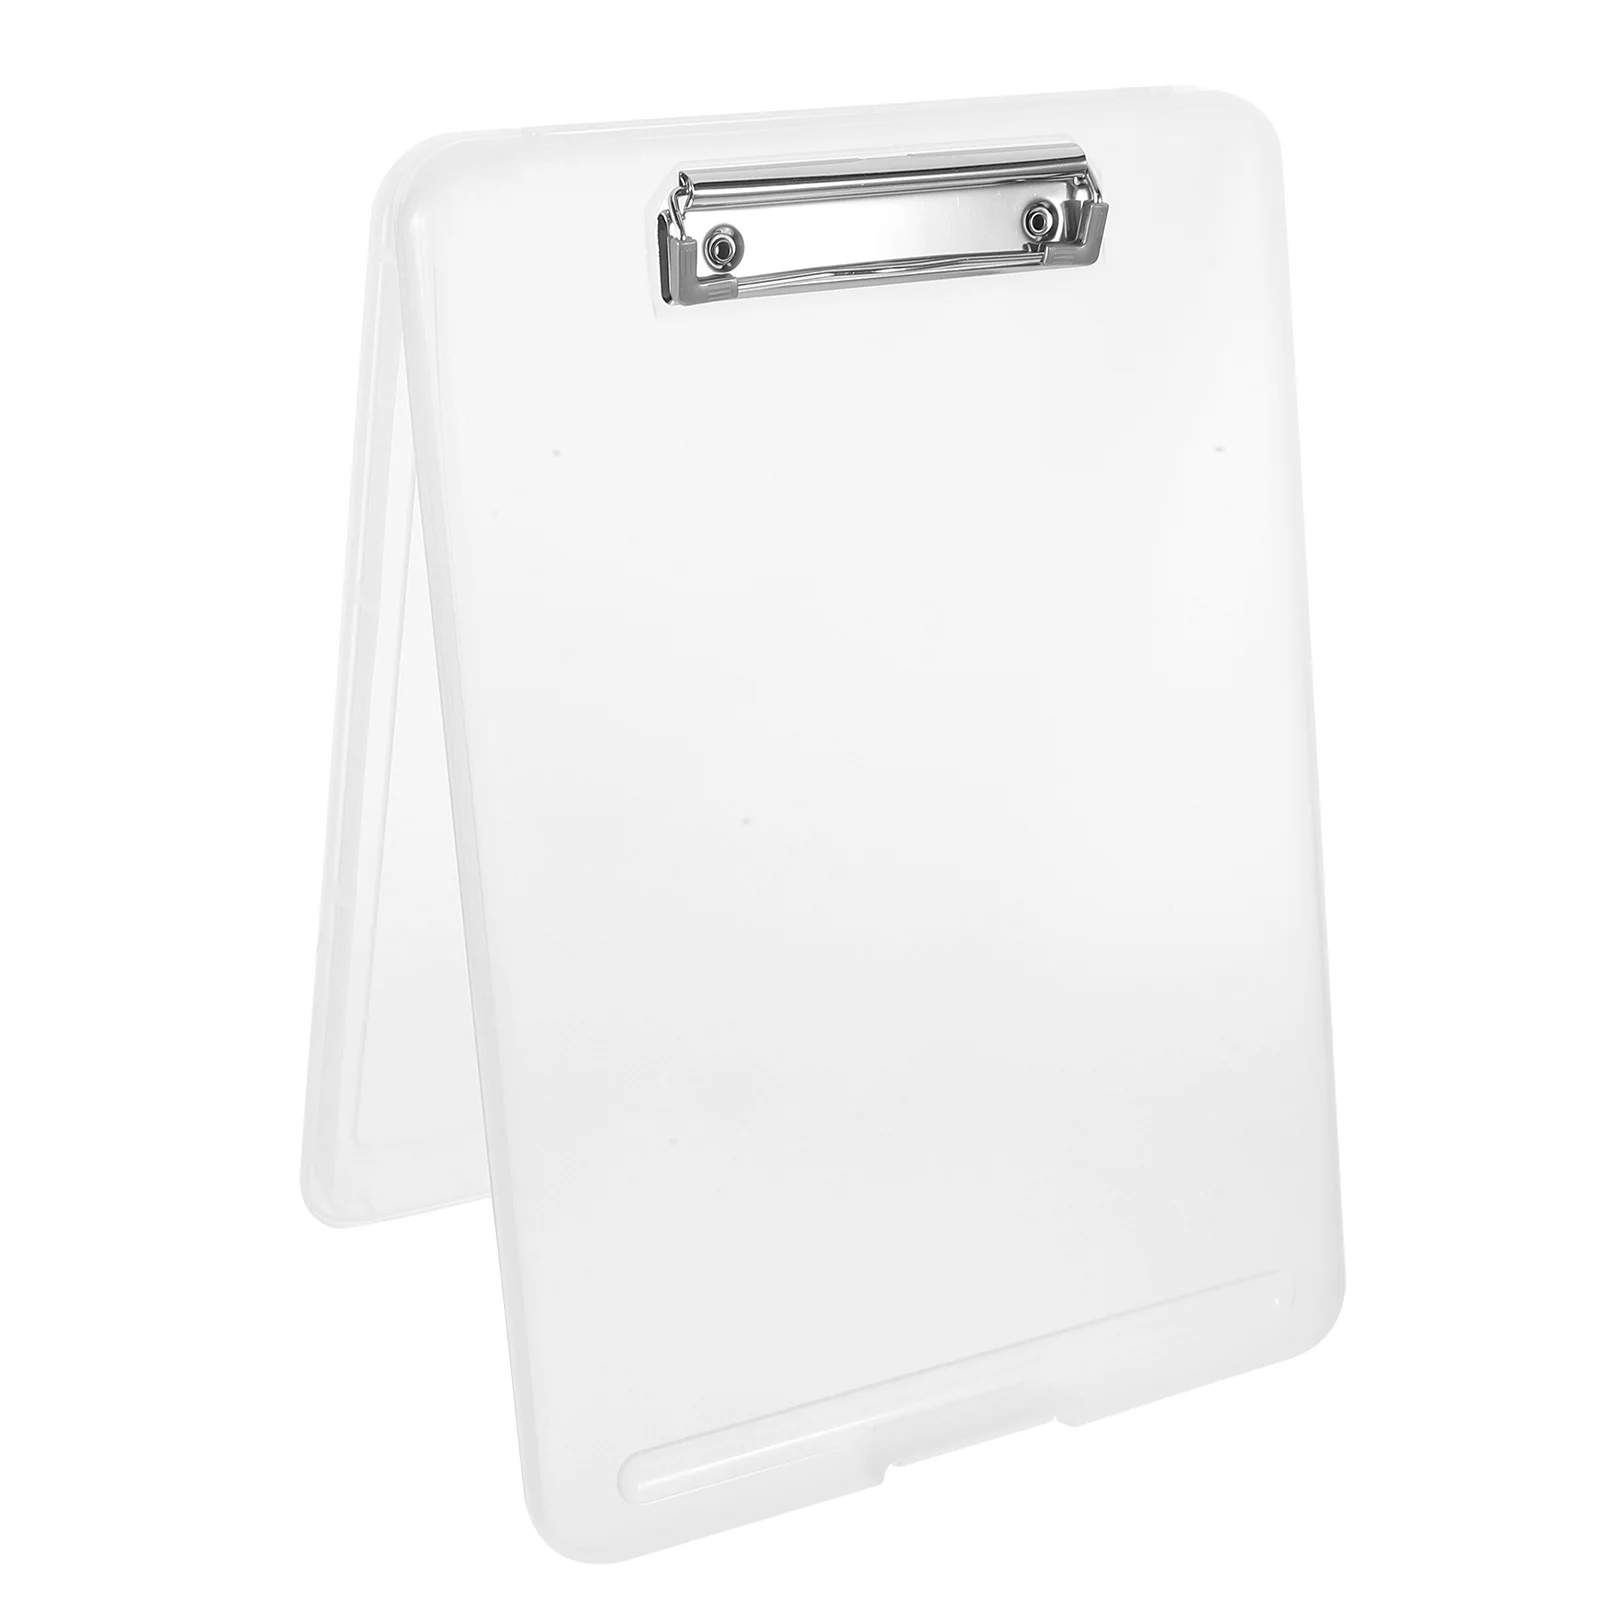 Plastic File Folder Portable Clipboard Document Storage Holder Clipboard with Storage File Organizer